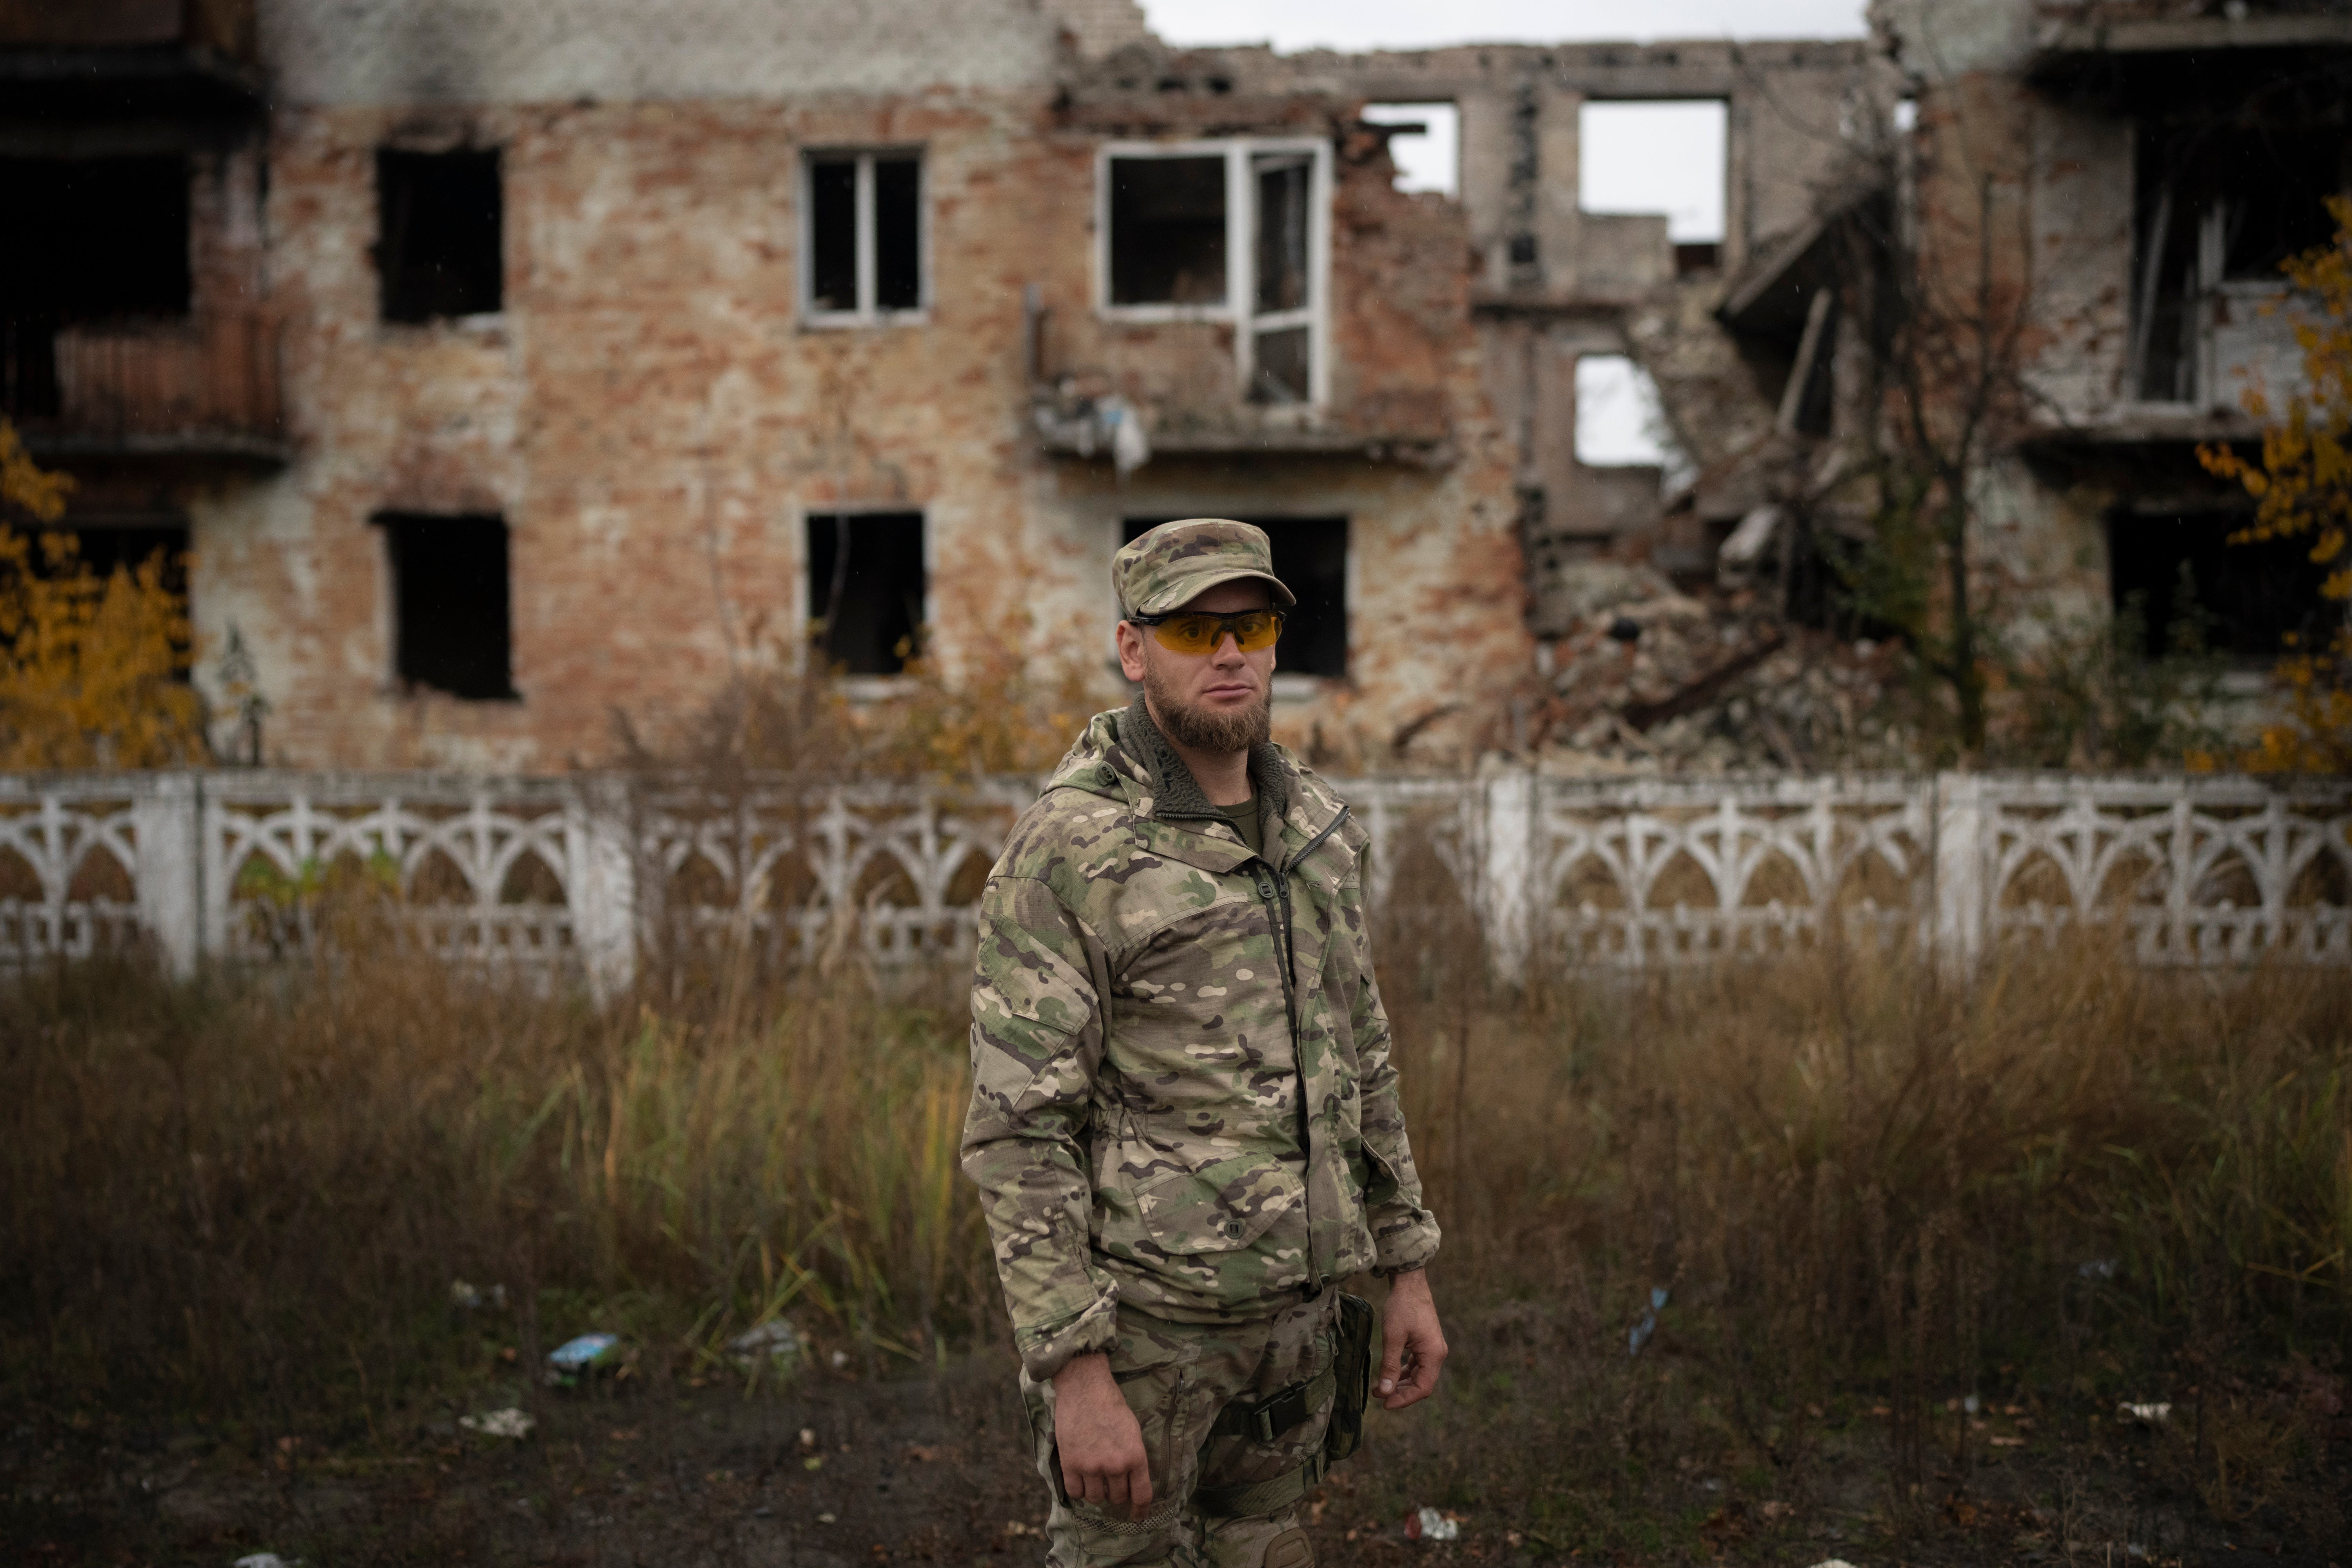 Oleksii Yukov, a Ukrainian body collector, stands for a portrait in the Sloviansk region